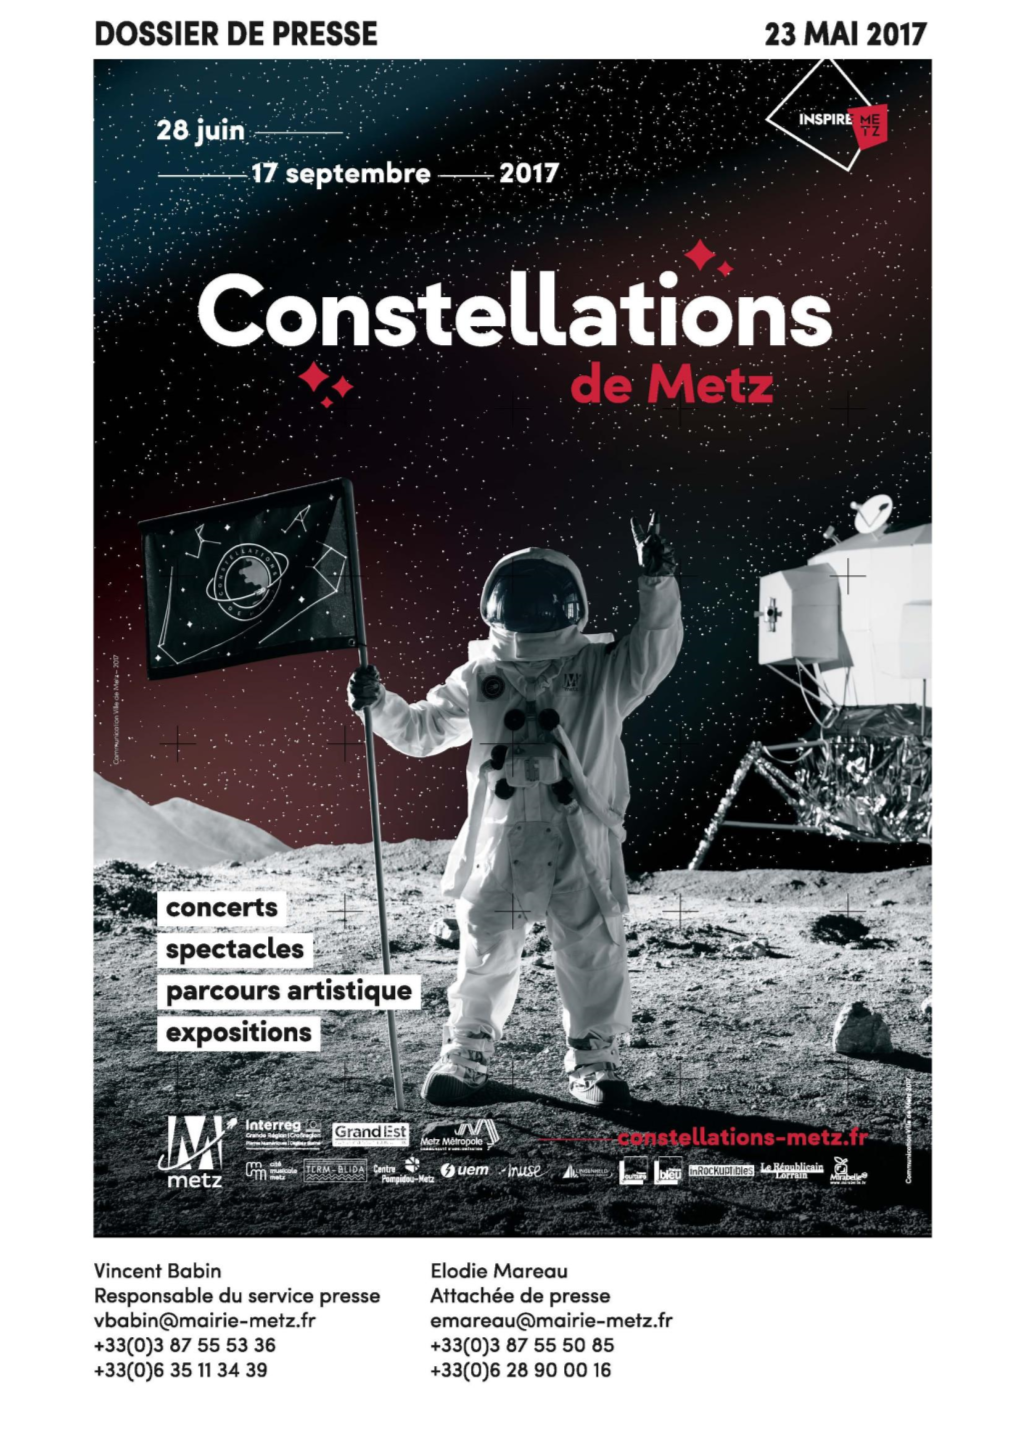 Les Ambitions De "Constellations De Metz"